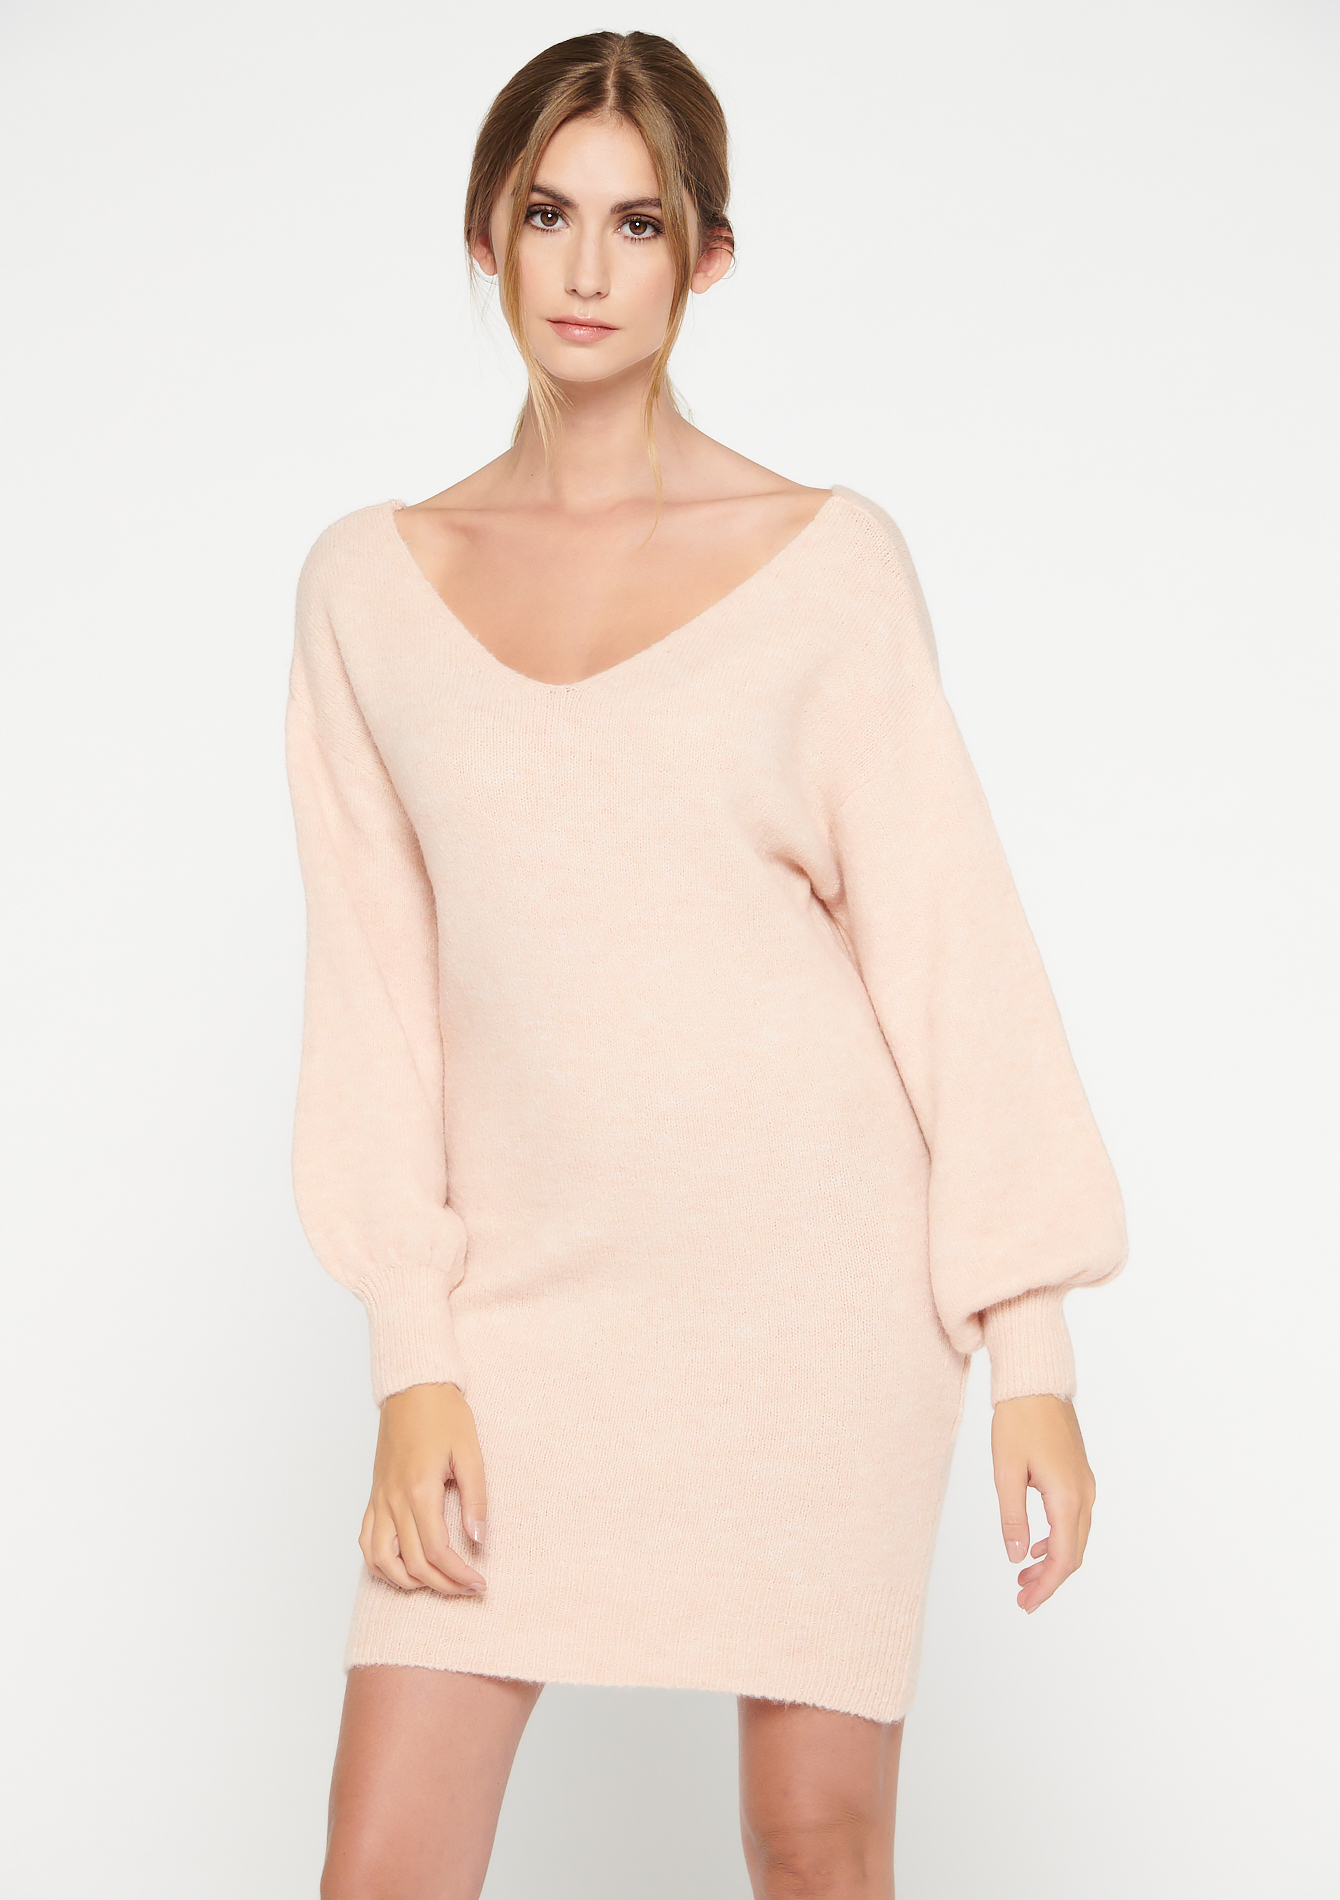 Long sleeved sweater dress - NUDE PEACH - 15000487_301